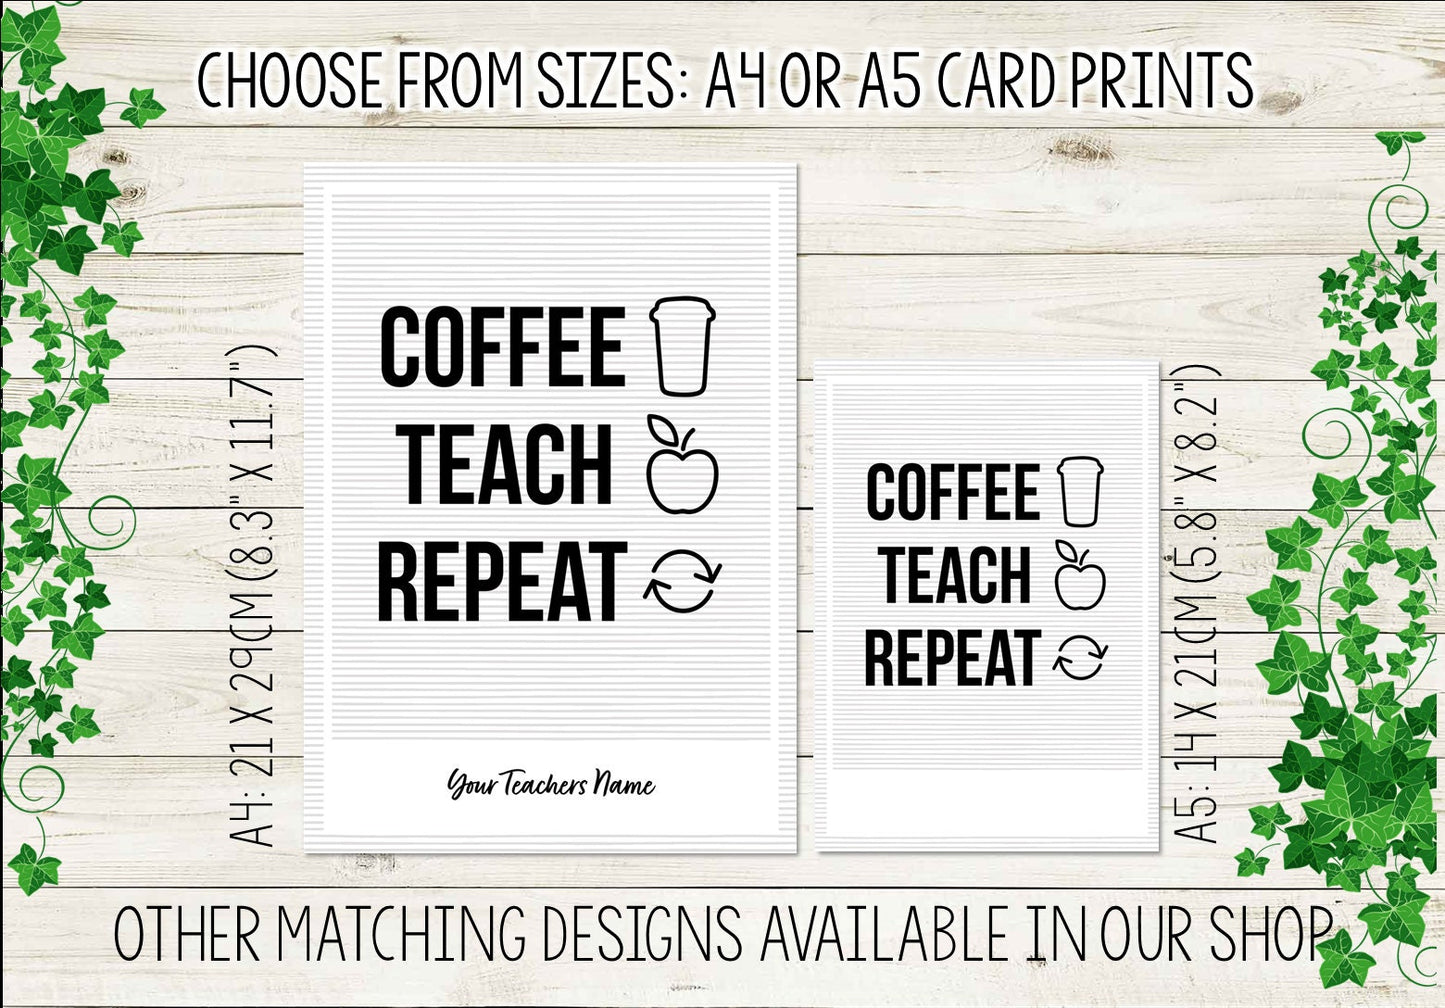 Coffee Teach Repeat Wall Art Print